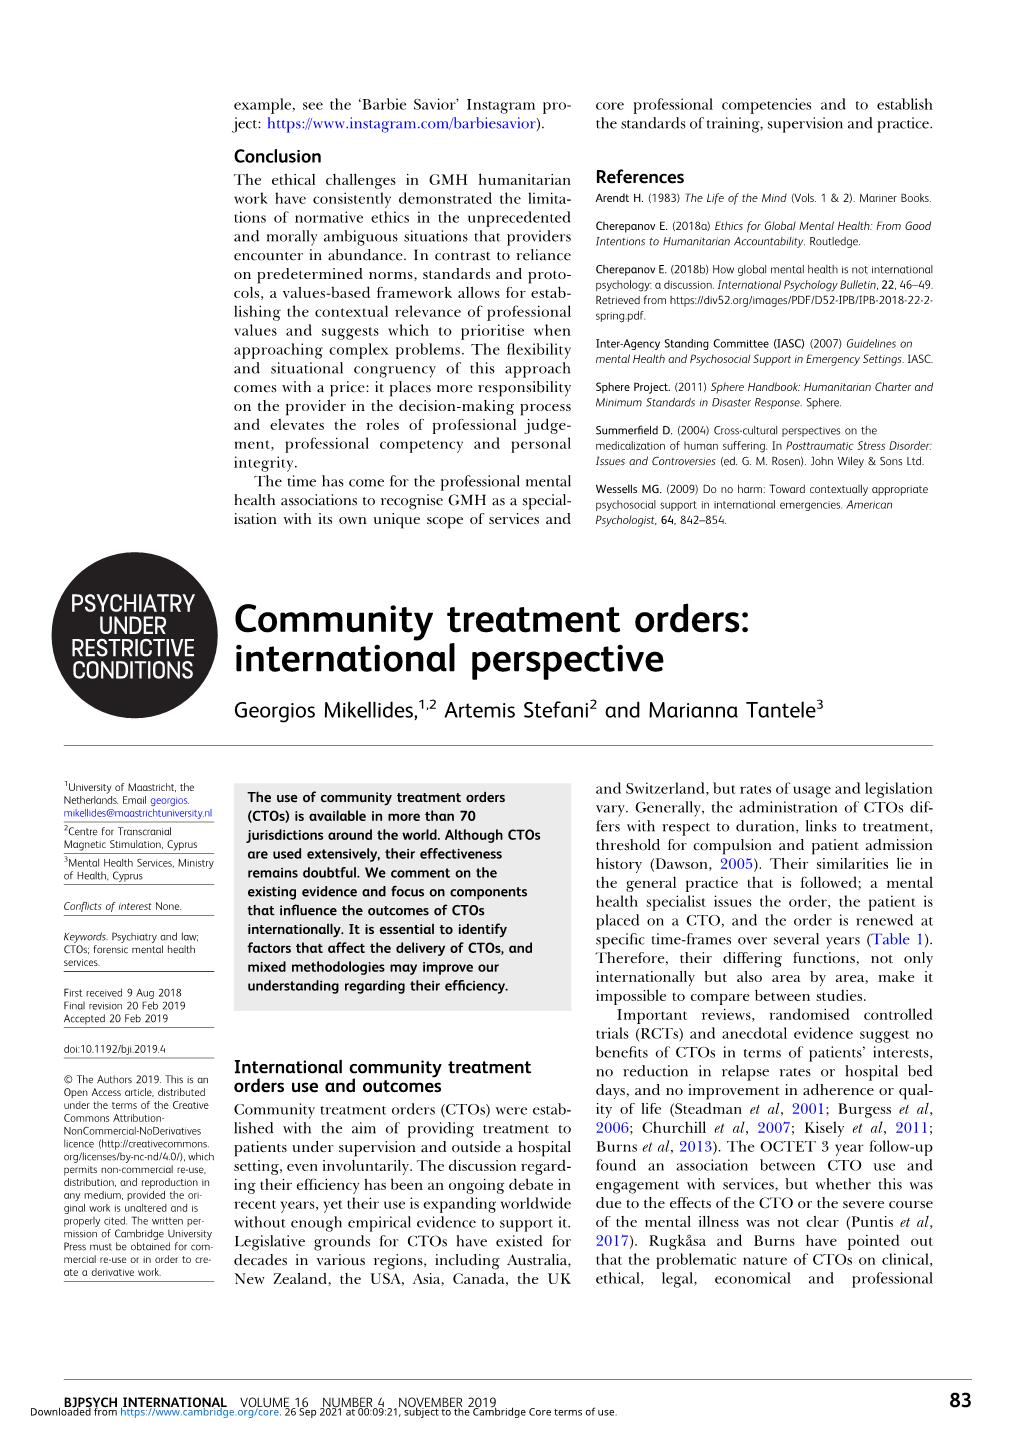 Community Treatment Orders: International Perspective